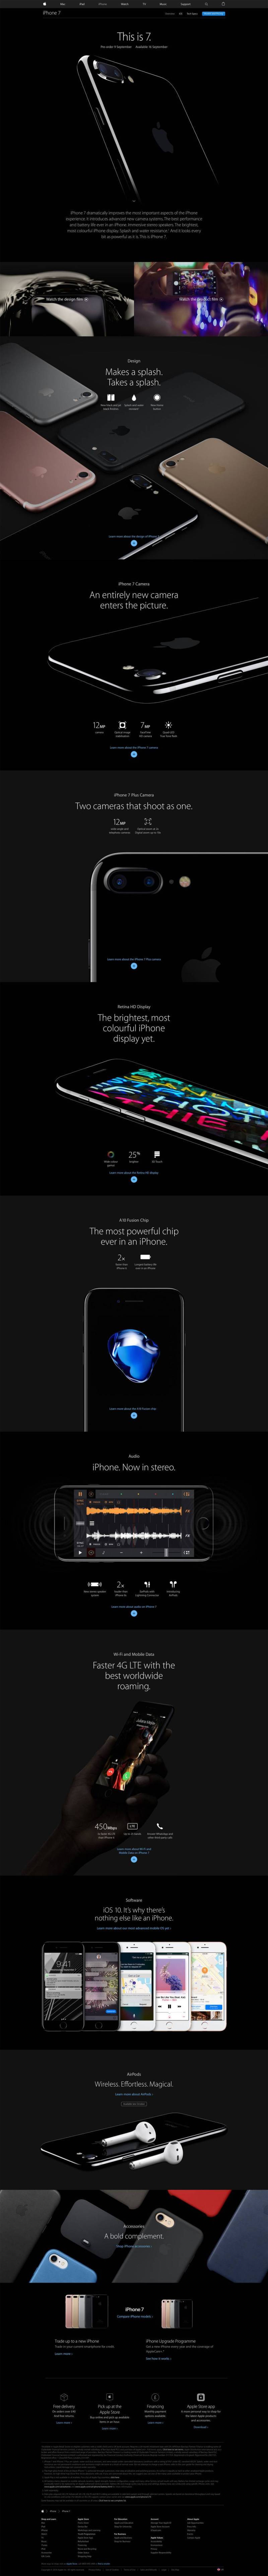 Apple iPhone 7 着陆页